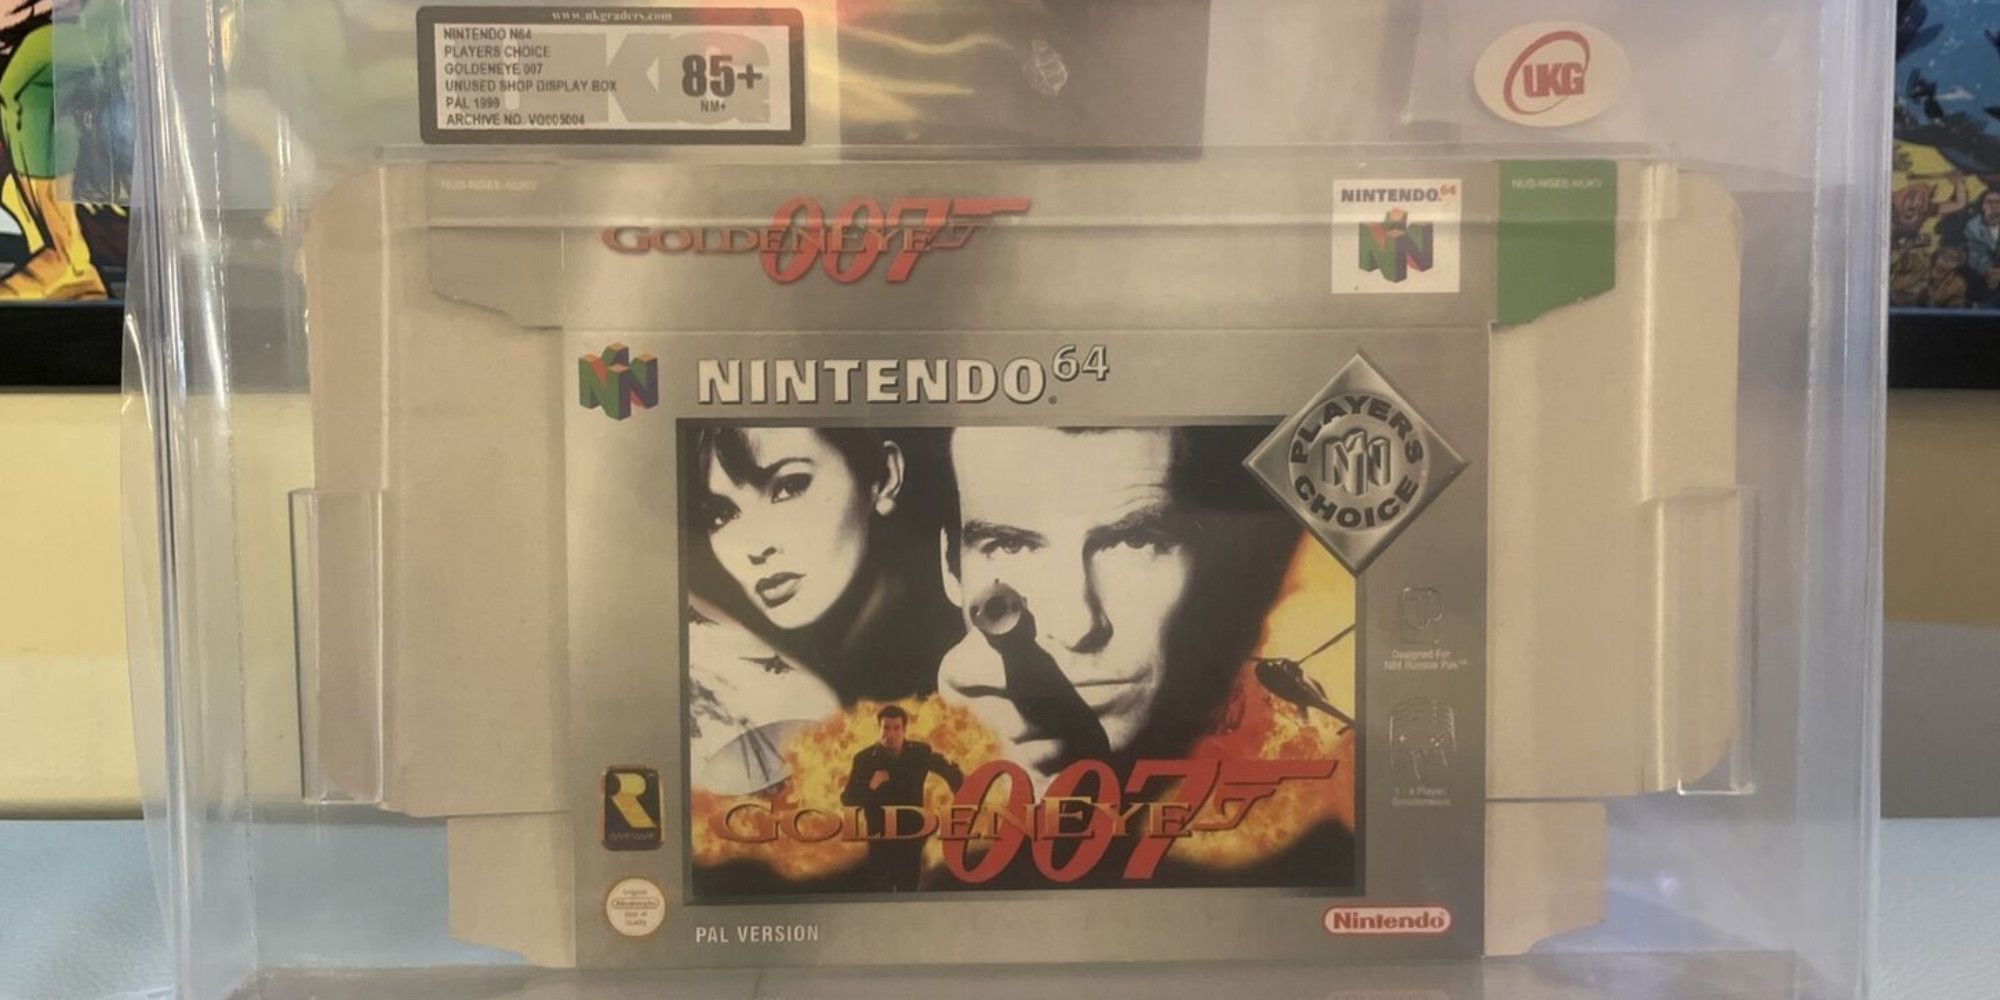 GOLDENEYE 007 NINTENDO 64 Complete In Box Rare Excellent Condition